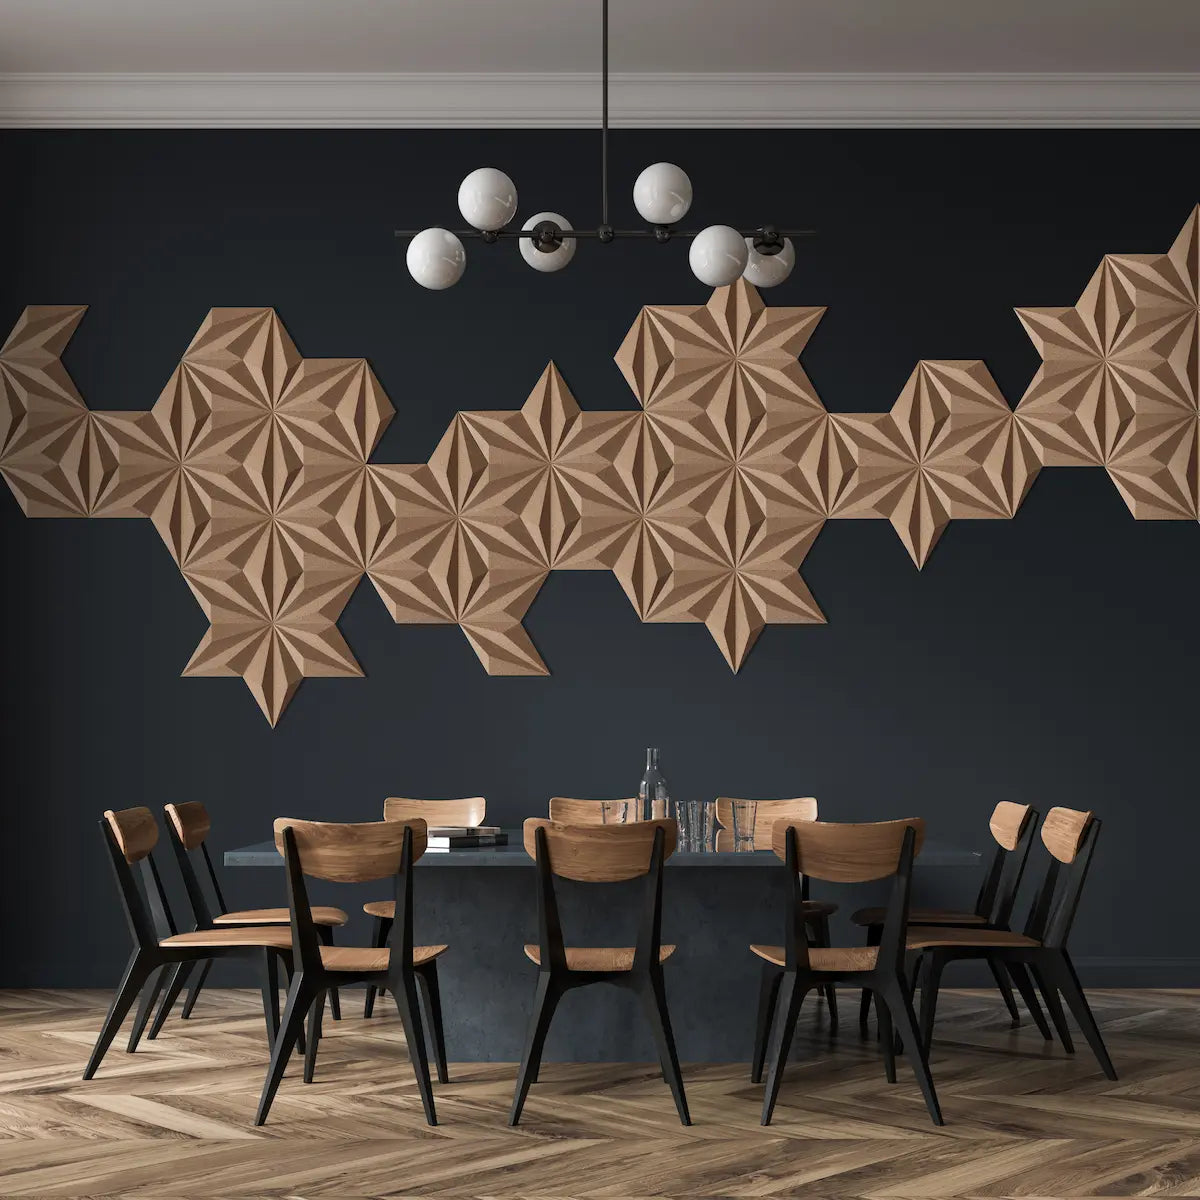 LINE Acoustic 3D cork wall panel